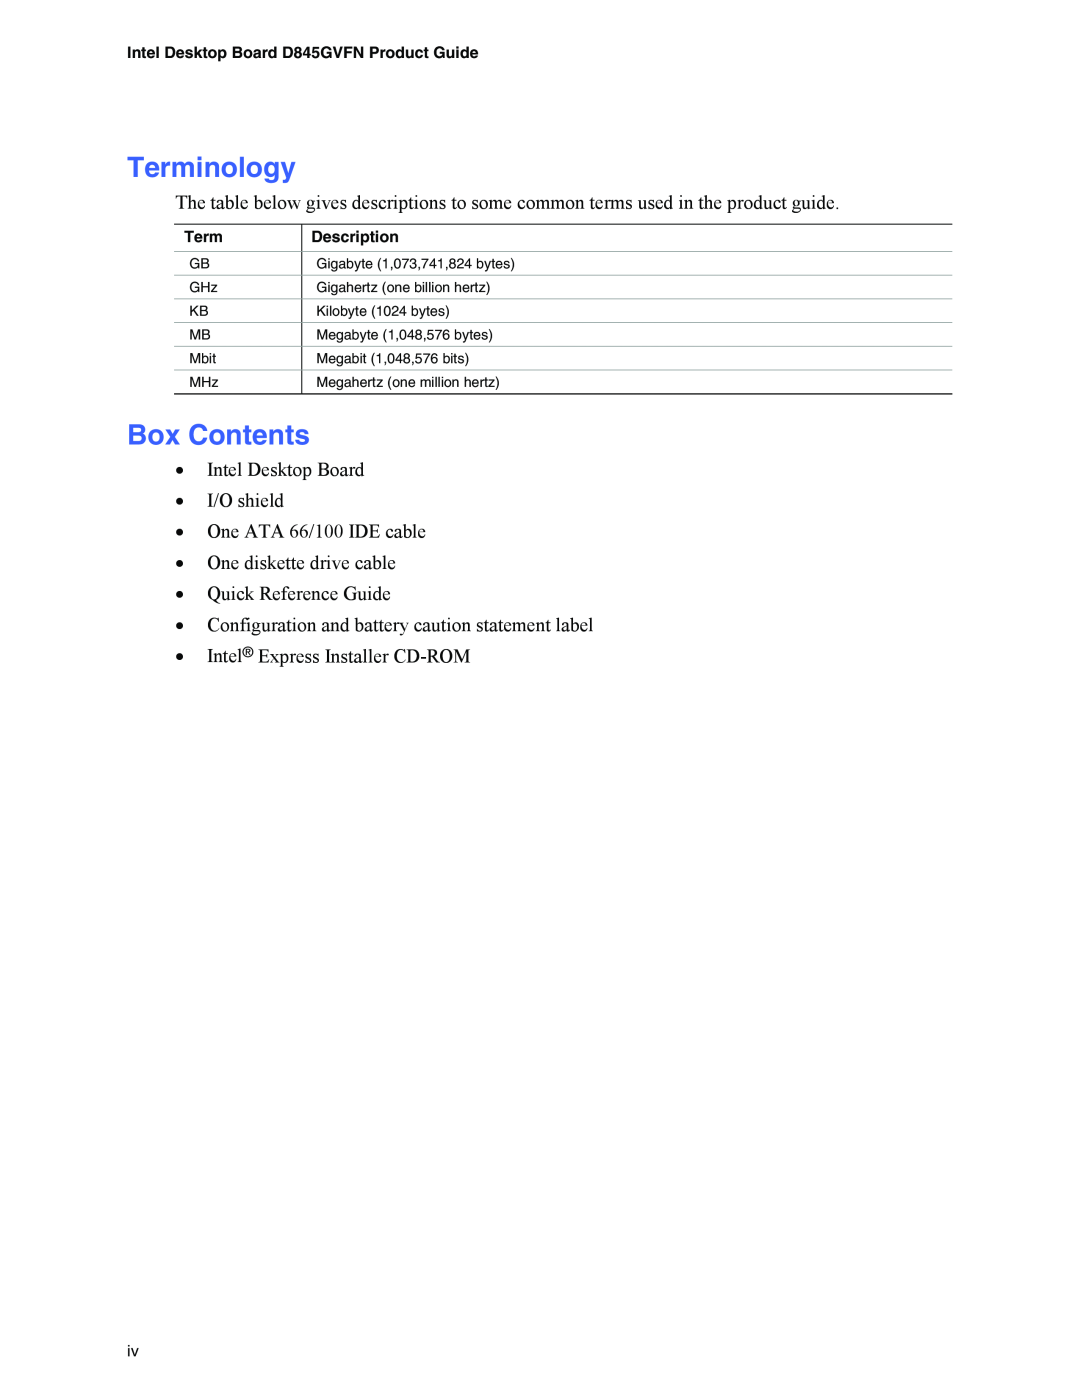 Intel D845GVFN manual Terminology, Box Contents 